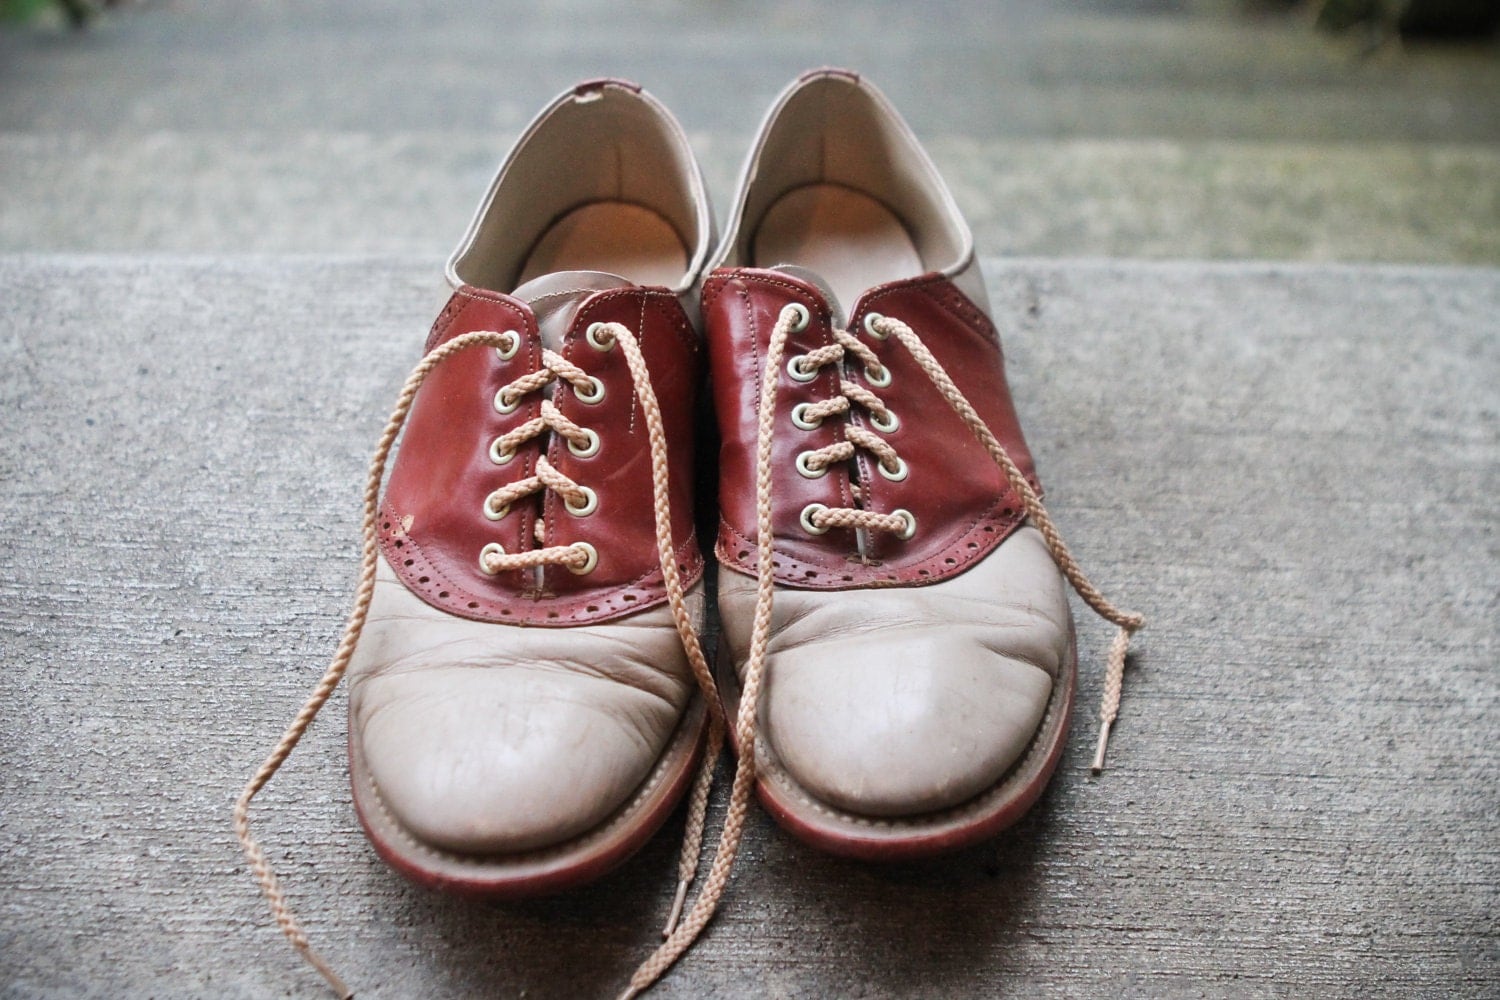 Old School Shoes: Old Vintage Saddle Shoes In Size 8